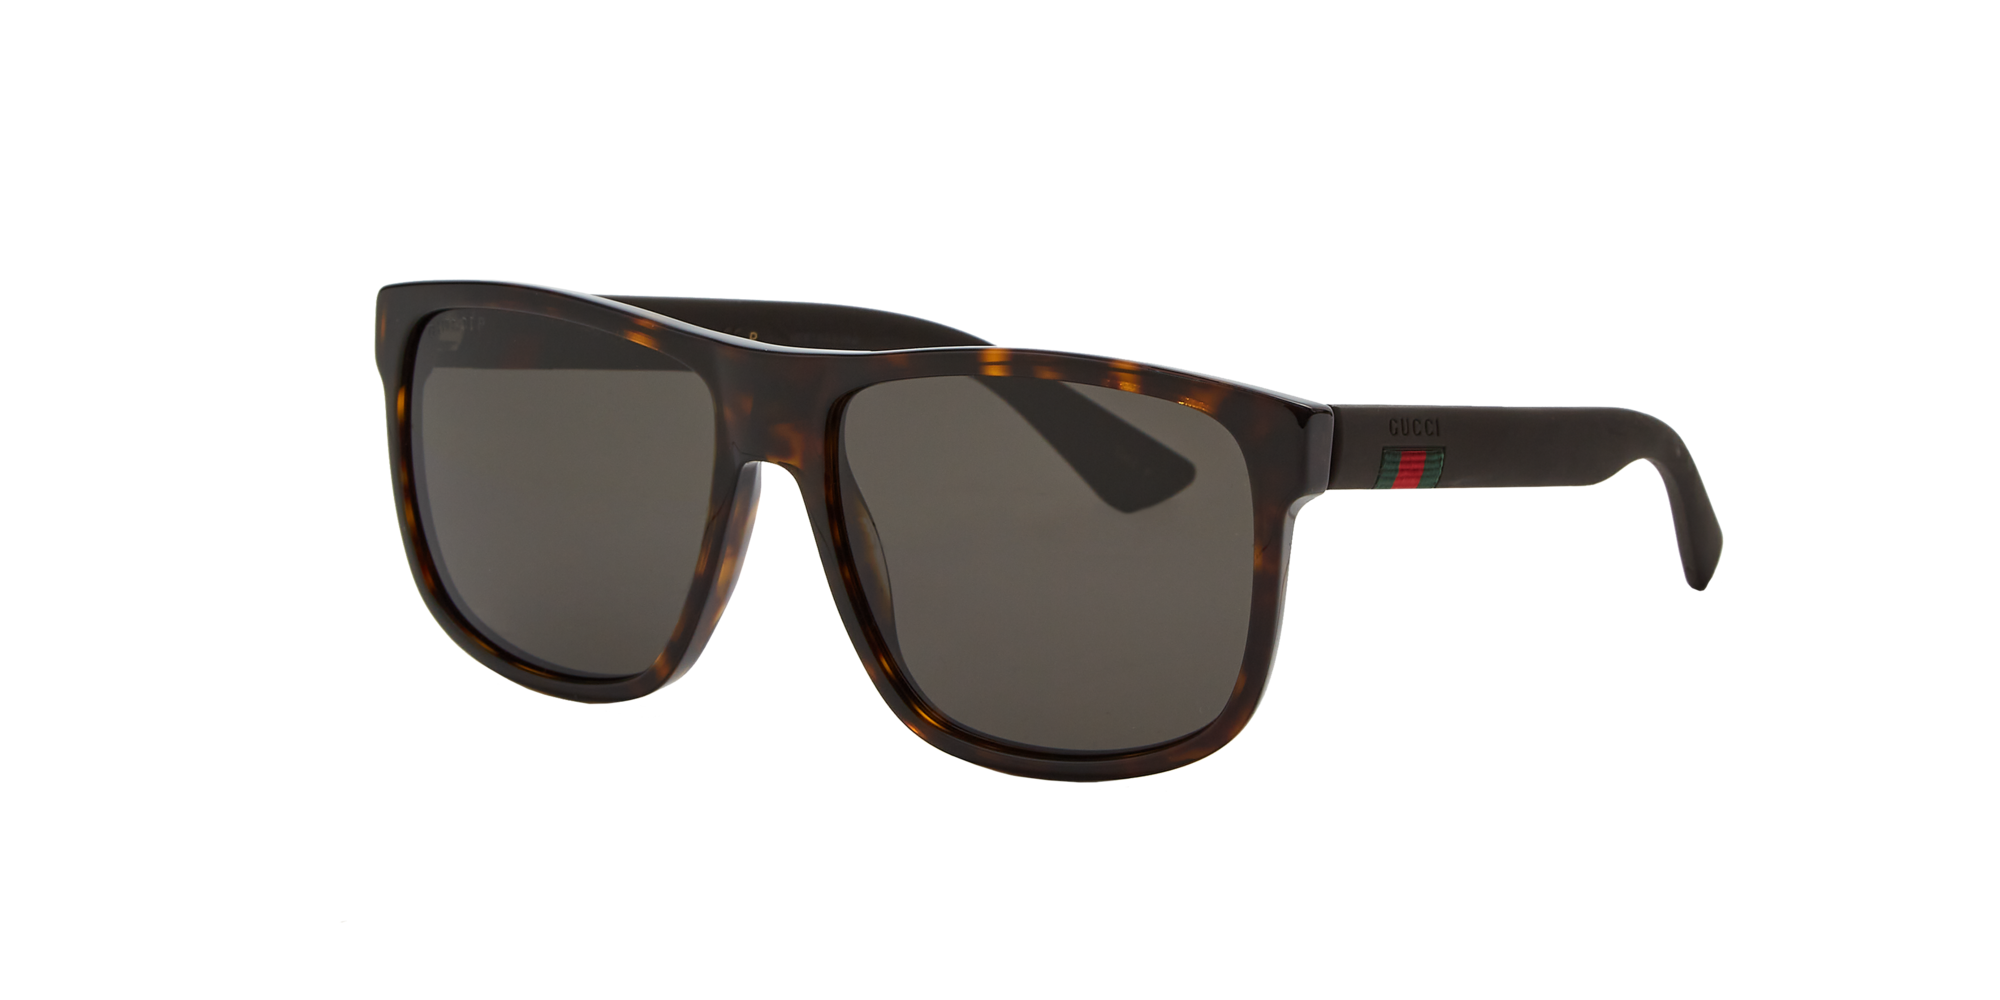 gg0010s fashion sunglasses 58mm